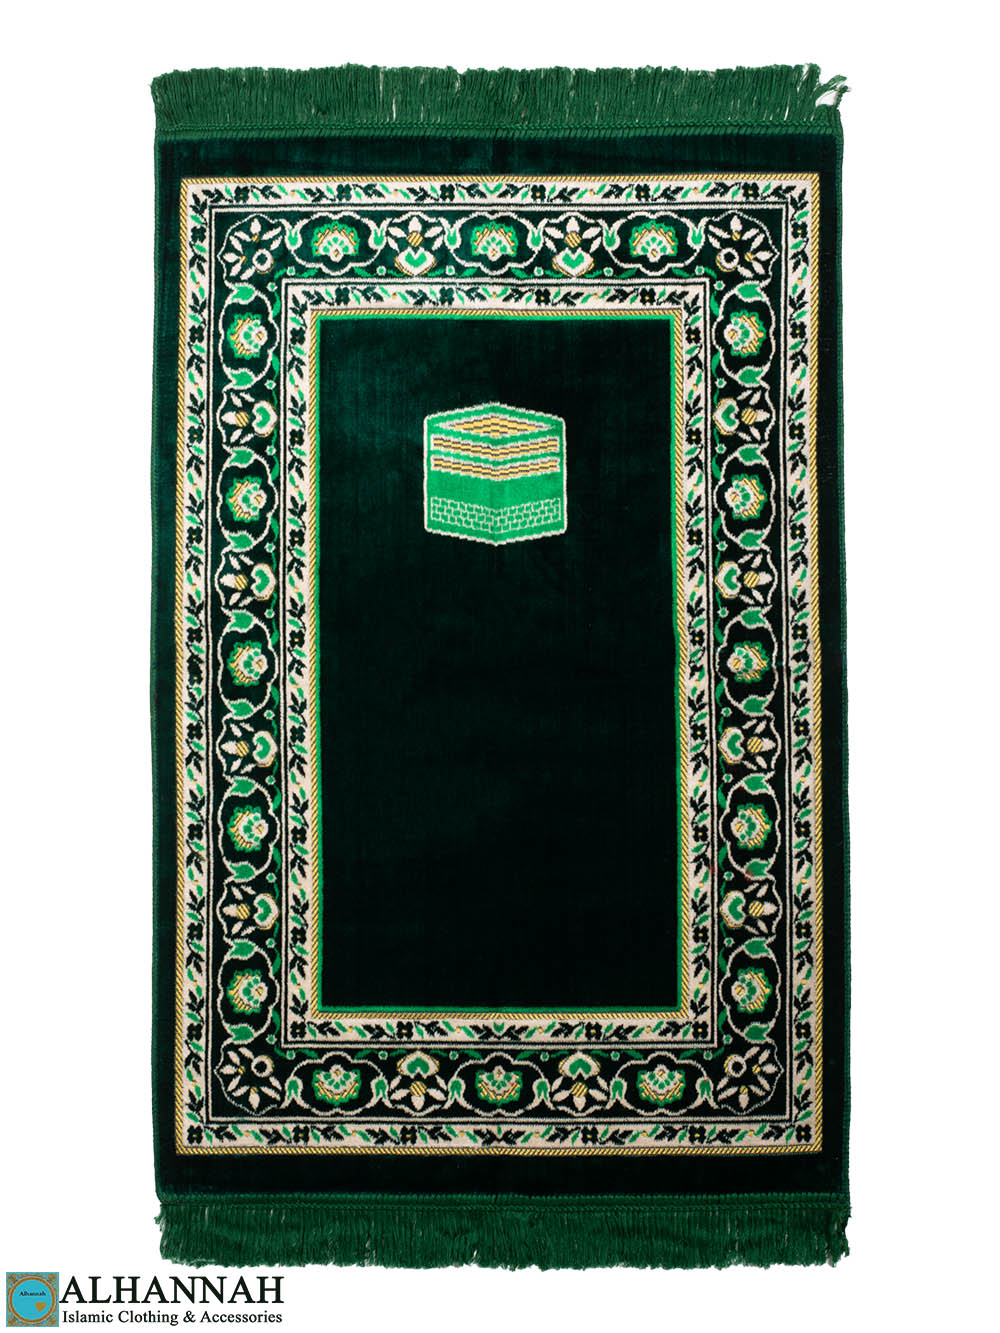 Voorwaarde Signaal Kan niet Turkish Prayer Rug with Kaaba Motif Forest-Green | ii1415 » Alhannah  Islamic Clothing